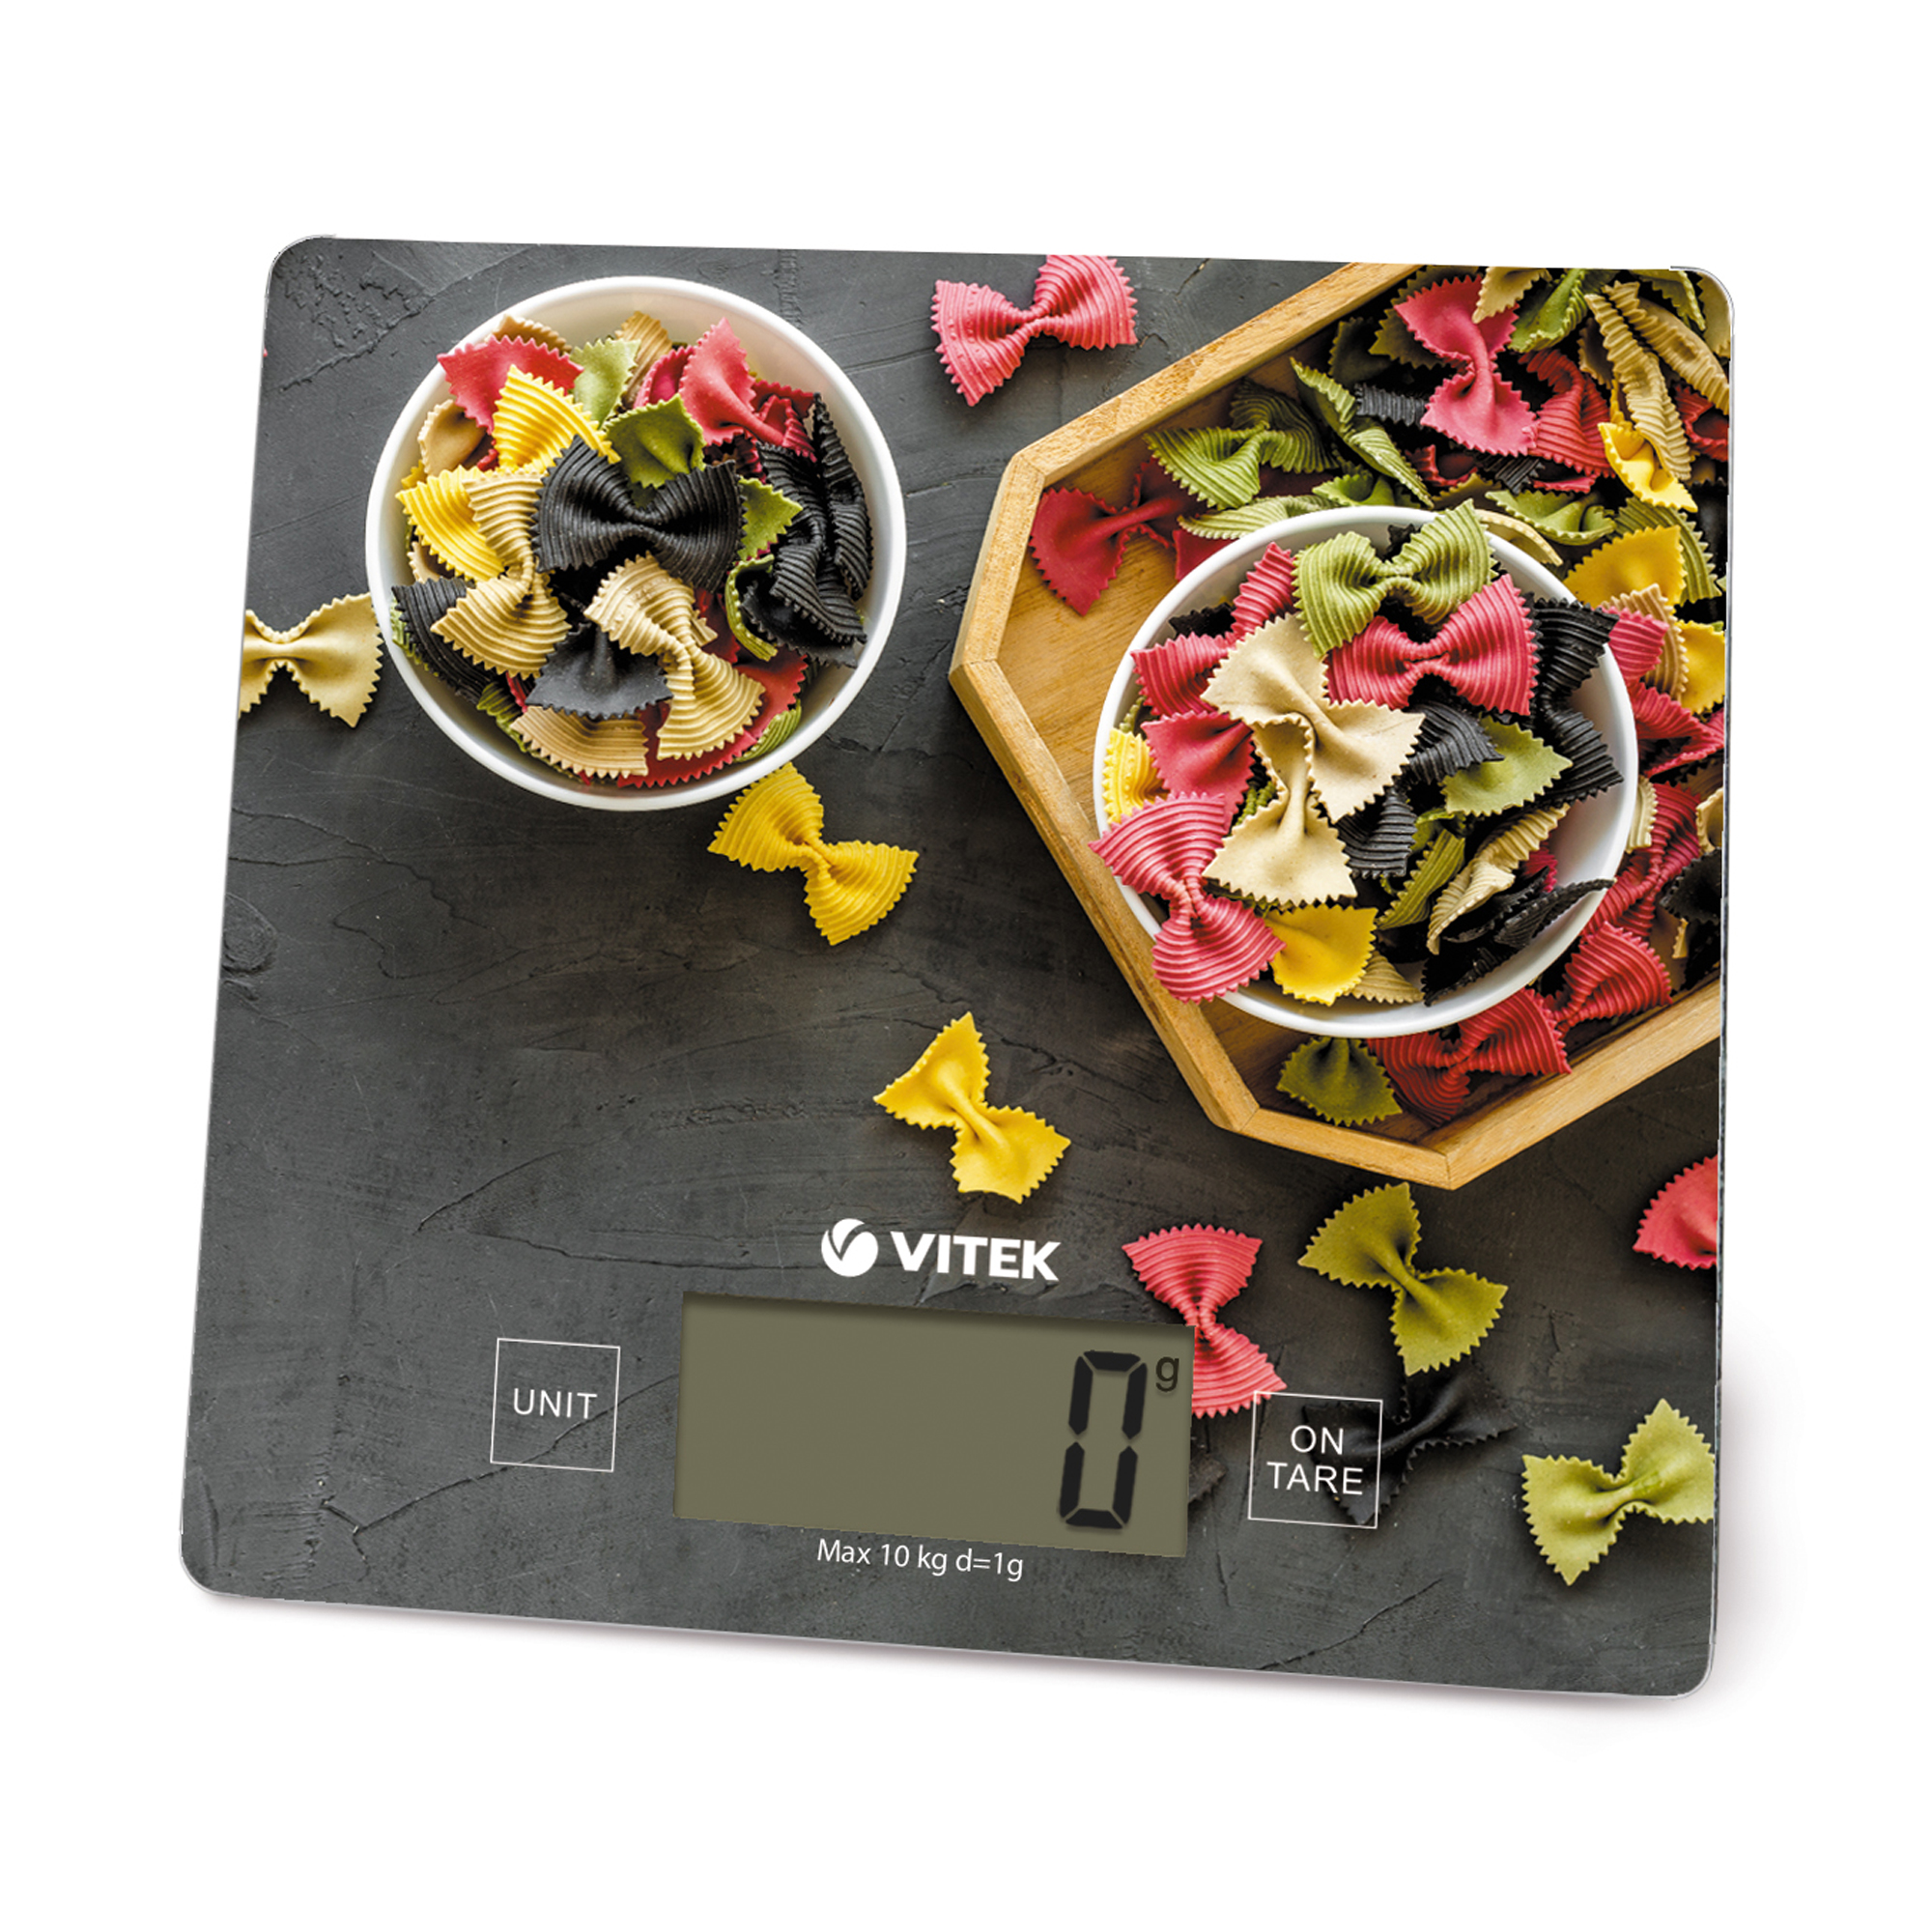 Весы кухонные vt. Весы кухонные Vitek VT-8035. Витек весы кухонные салфетки. Весы Витек кухонные треугольные. Кухонные весы Vitek VT-2409.